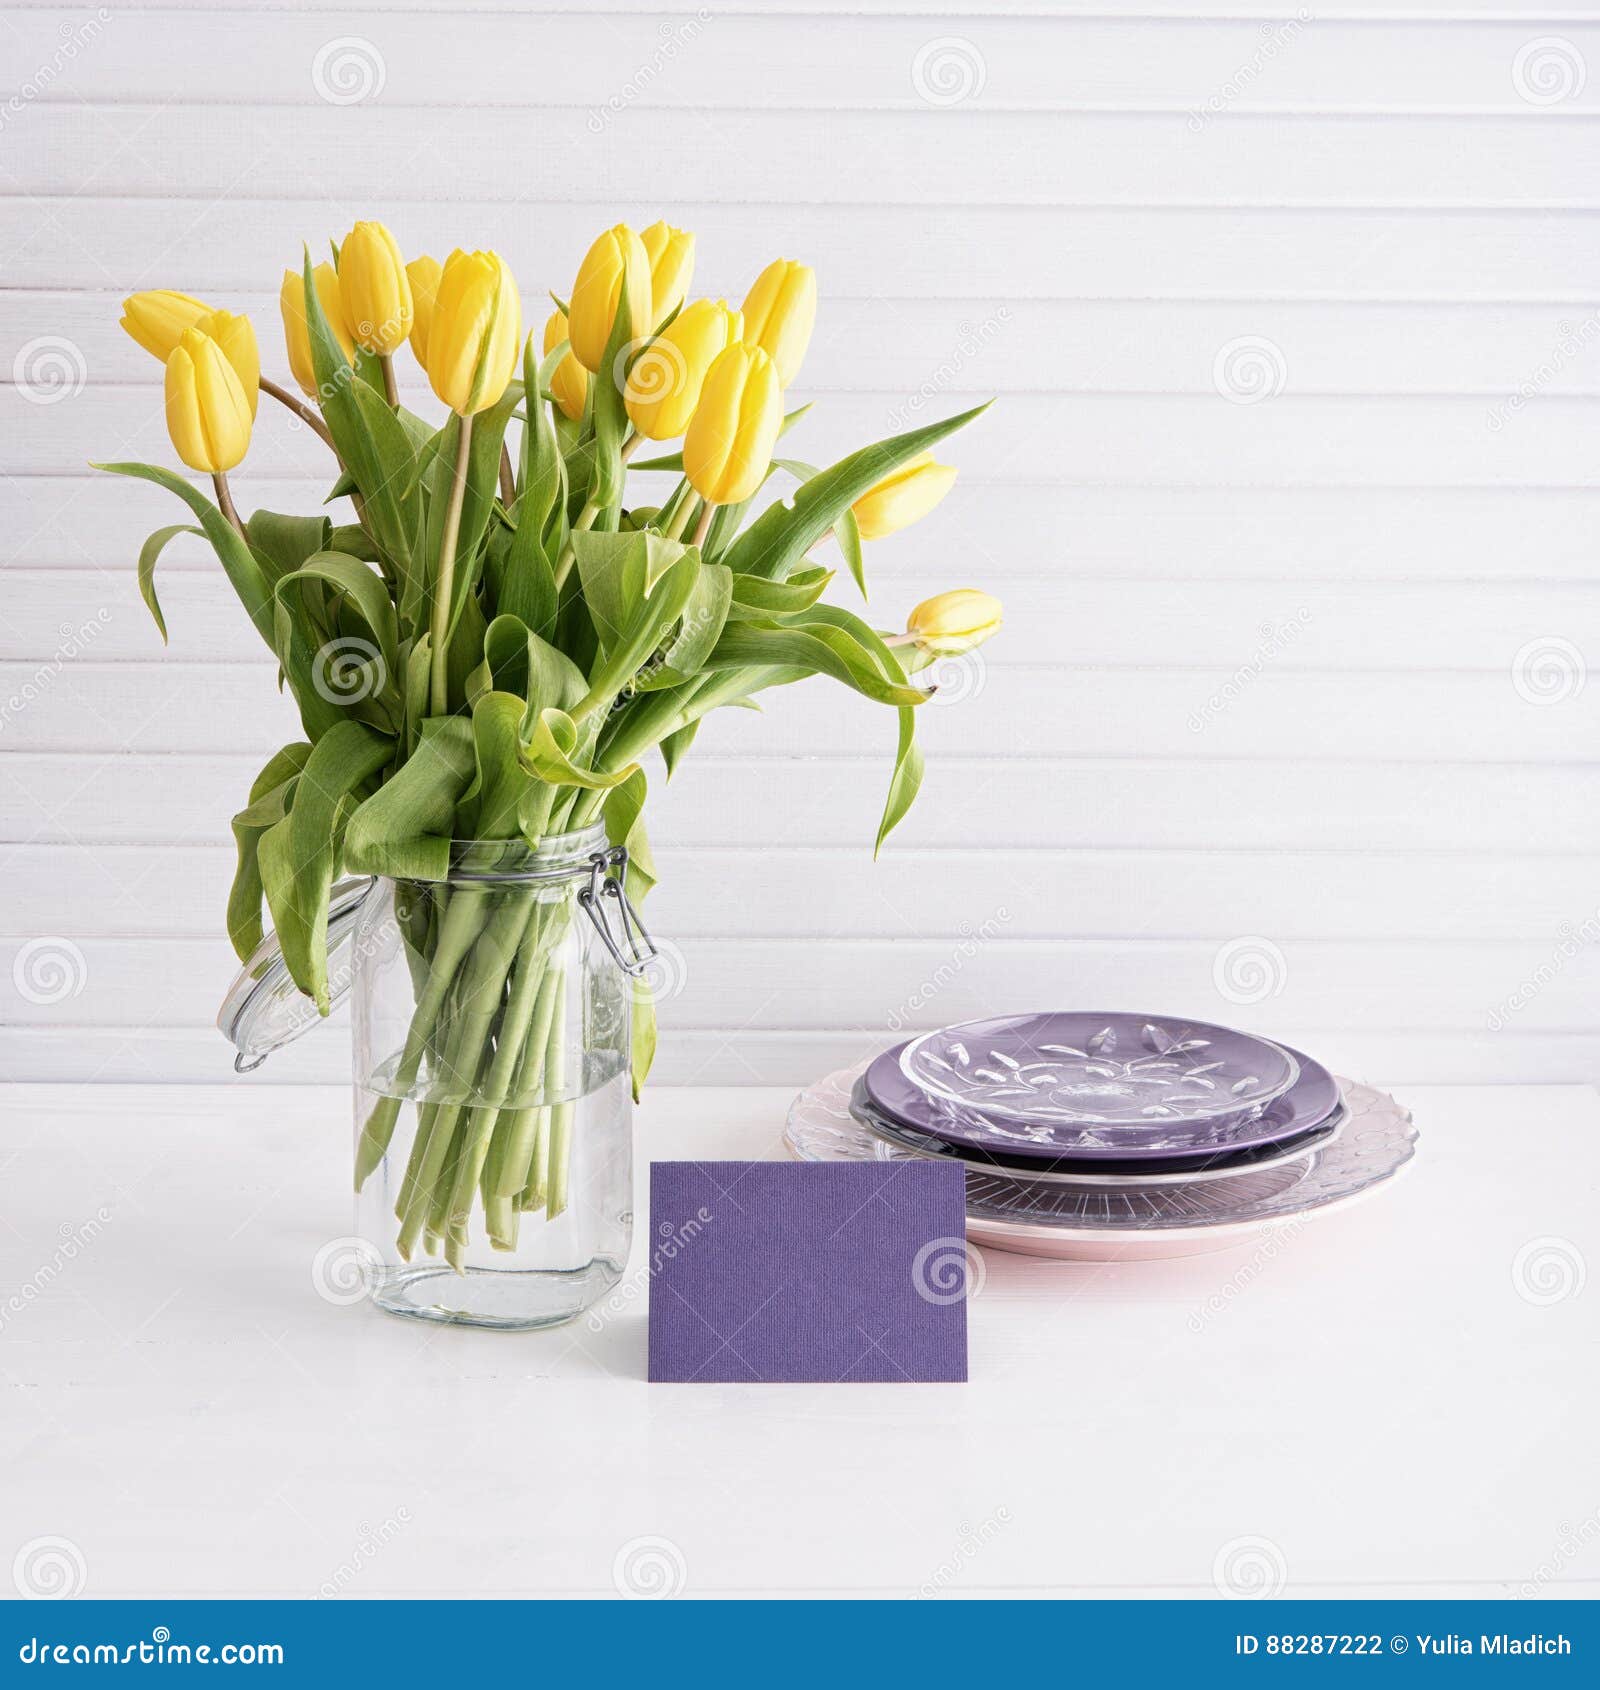 Tulips in vase stock photo. Image of empty, bright, flora - 88287222